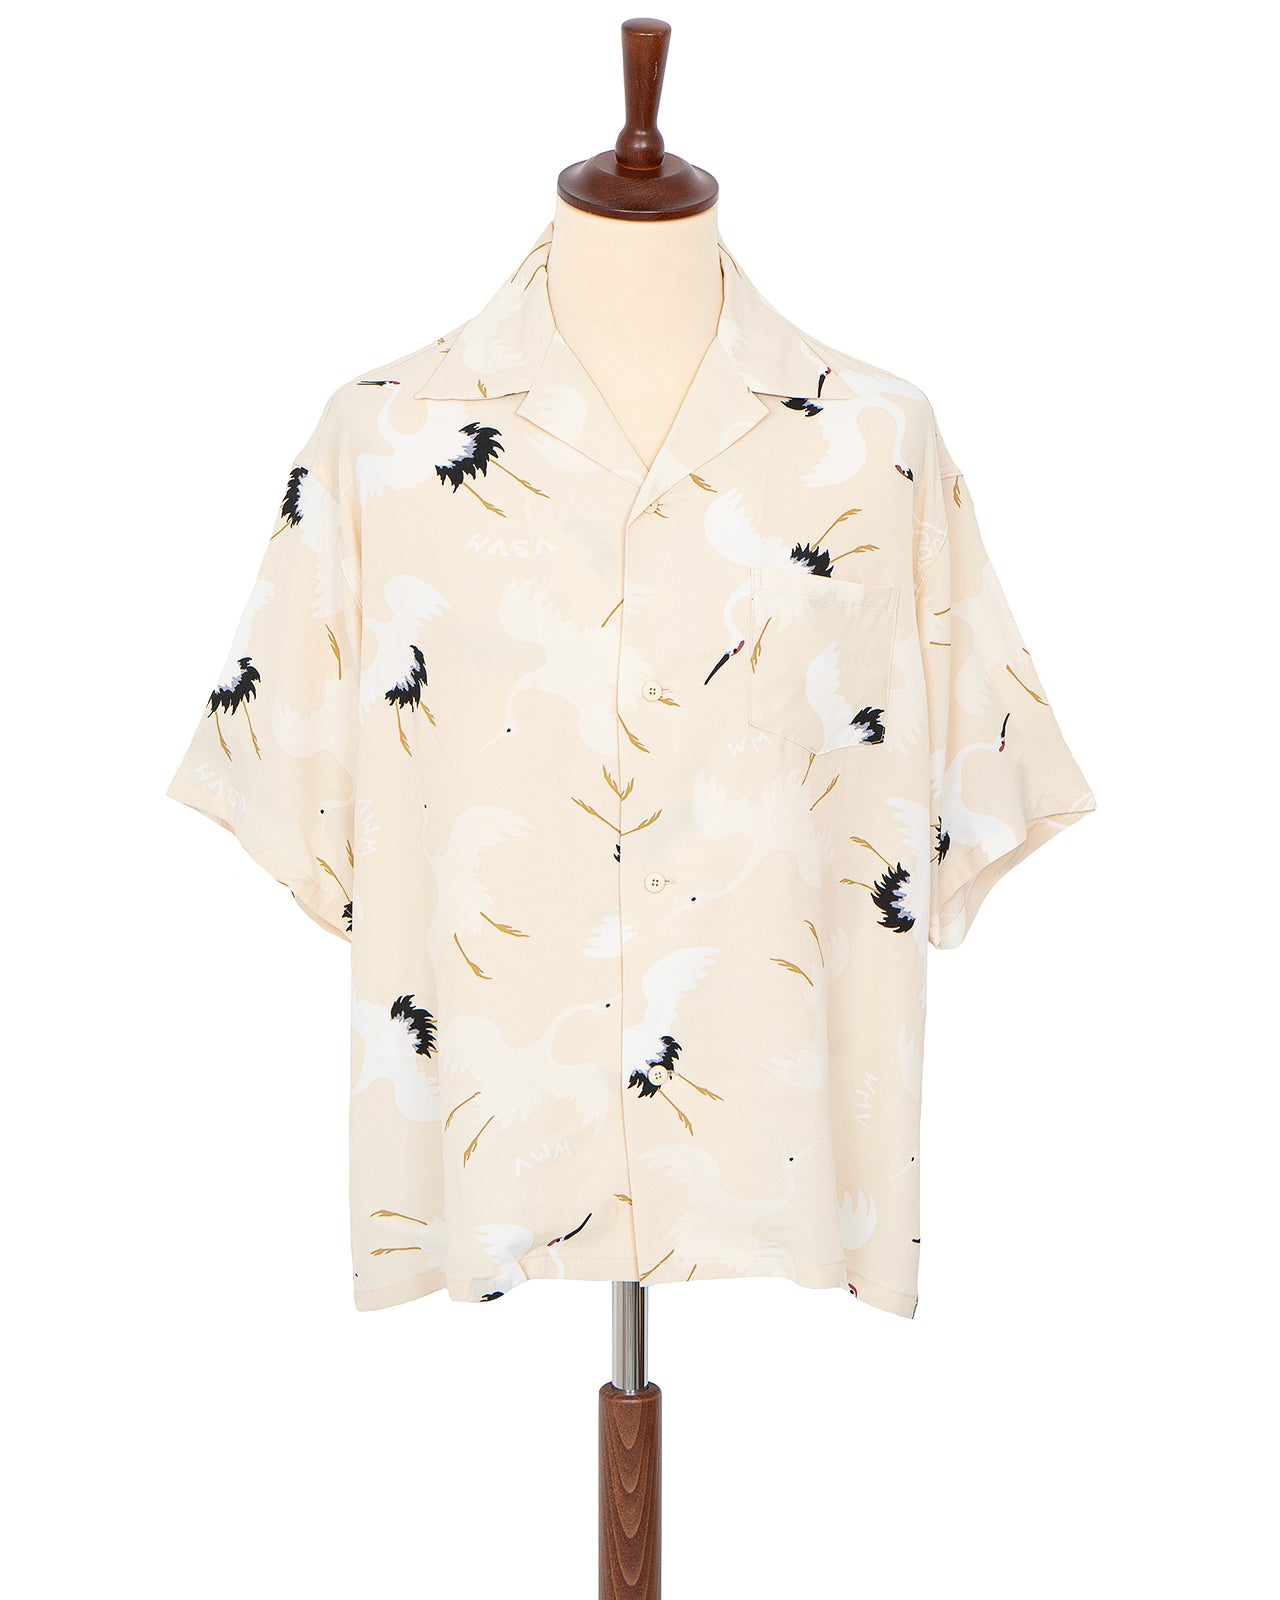 Visvim Crosby Shirt S/S Hikaku, Ivory – Pancho And Lefty - Online